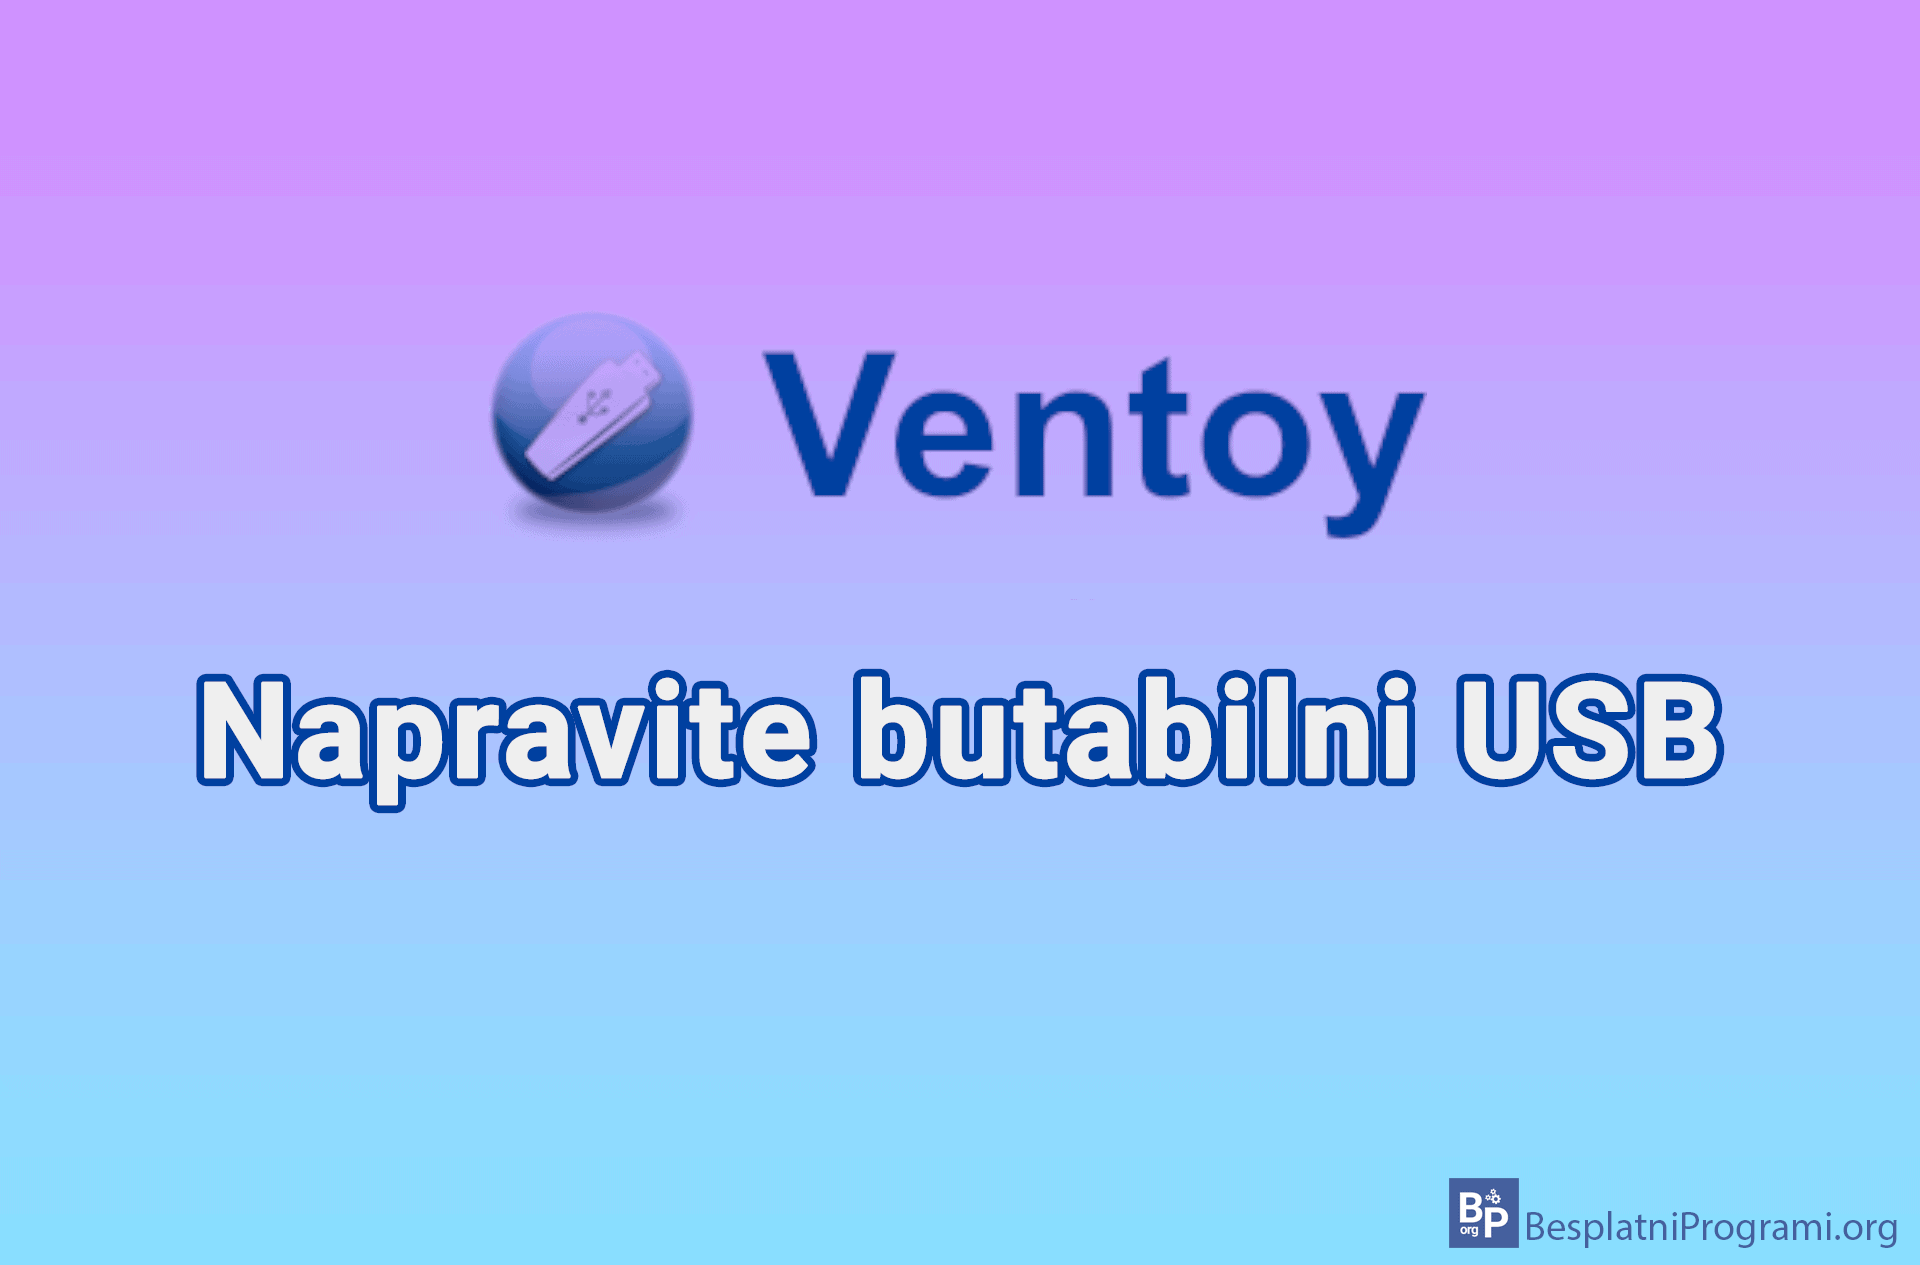 Ventoy – napravite boot-abilni USB